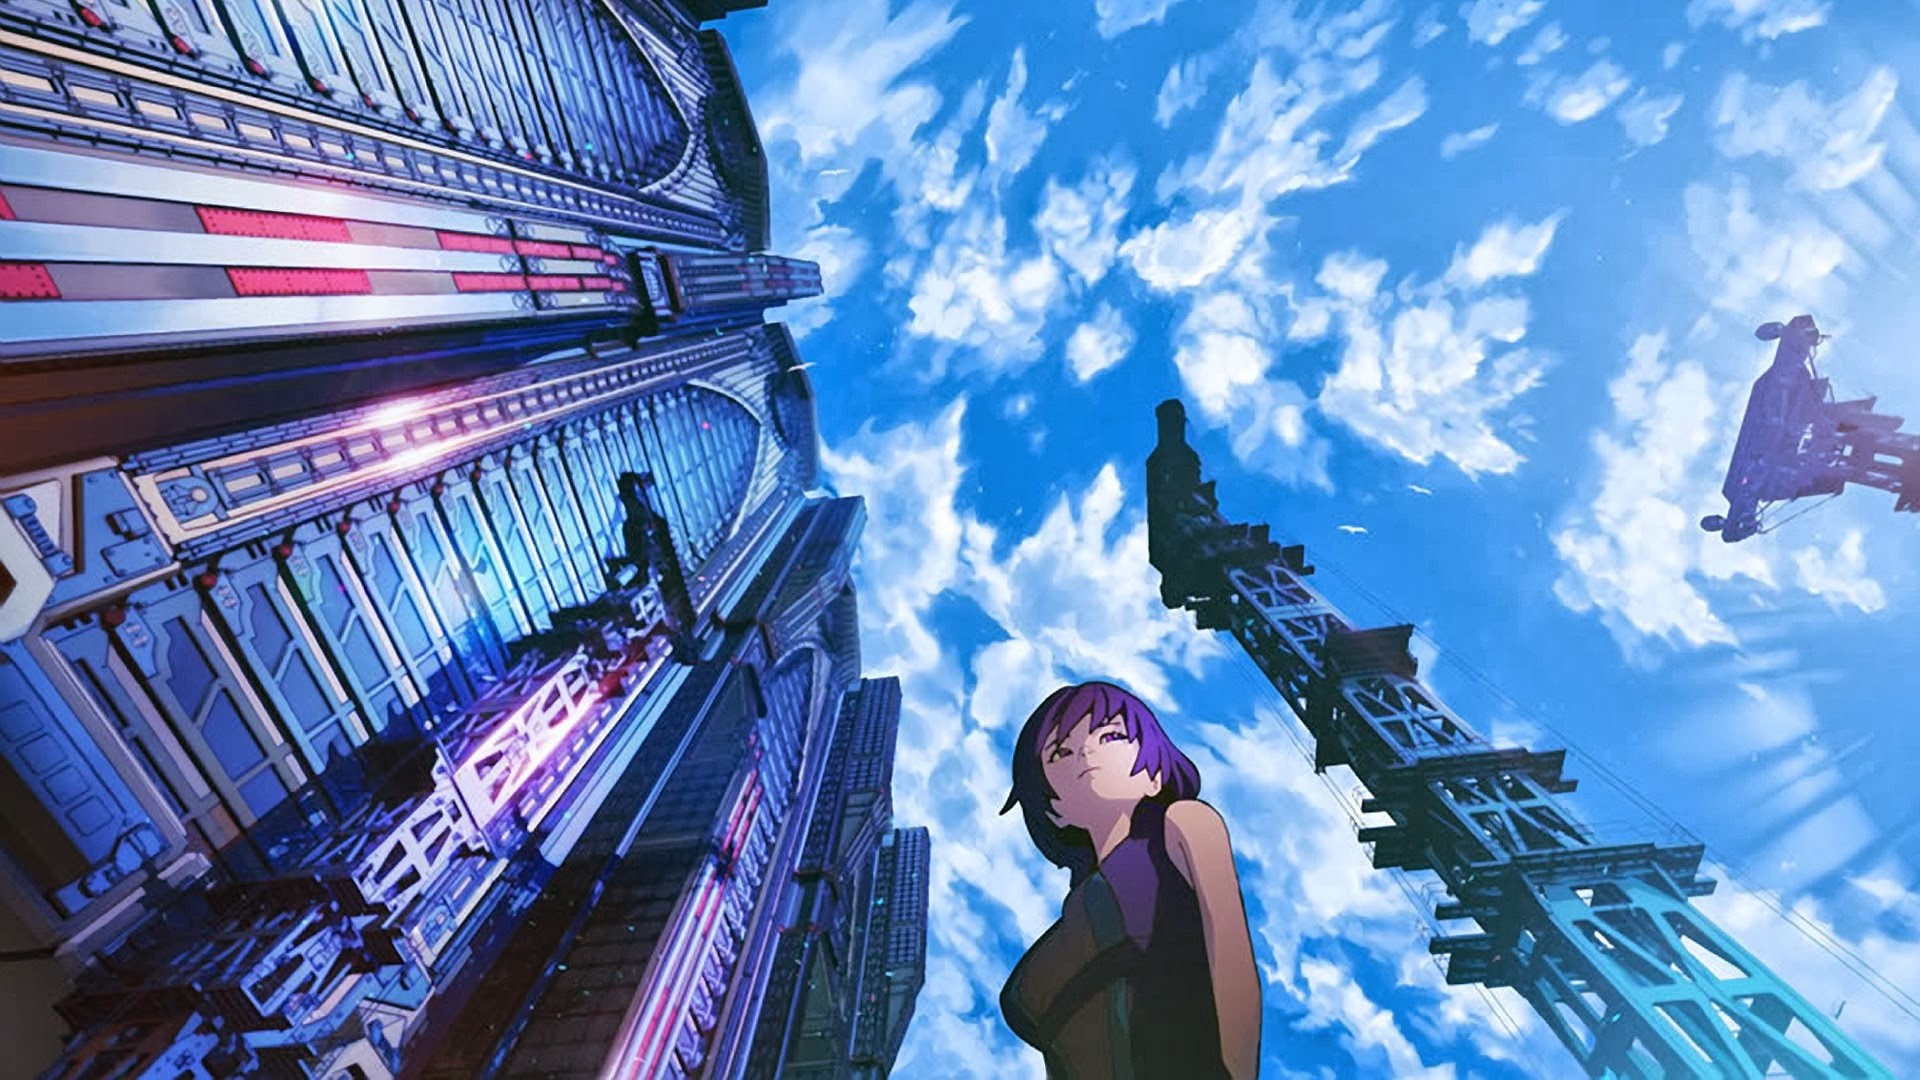 General 1920x1080 anime girls anime purple hair city worm's eye view fantasy art